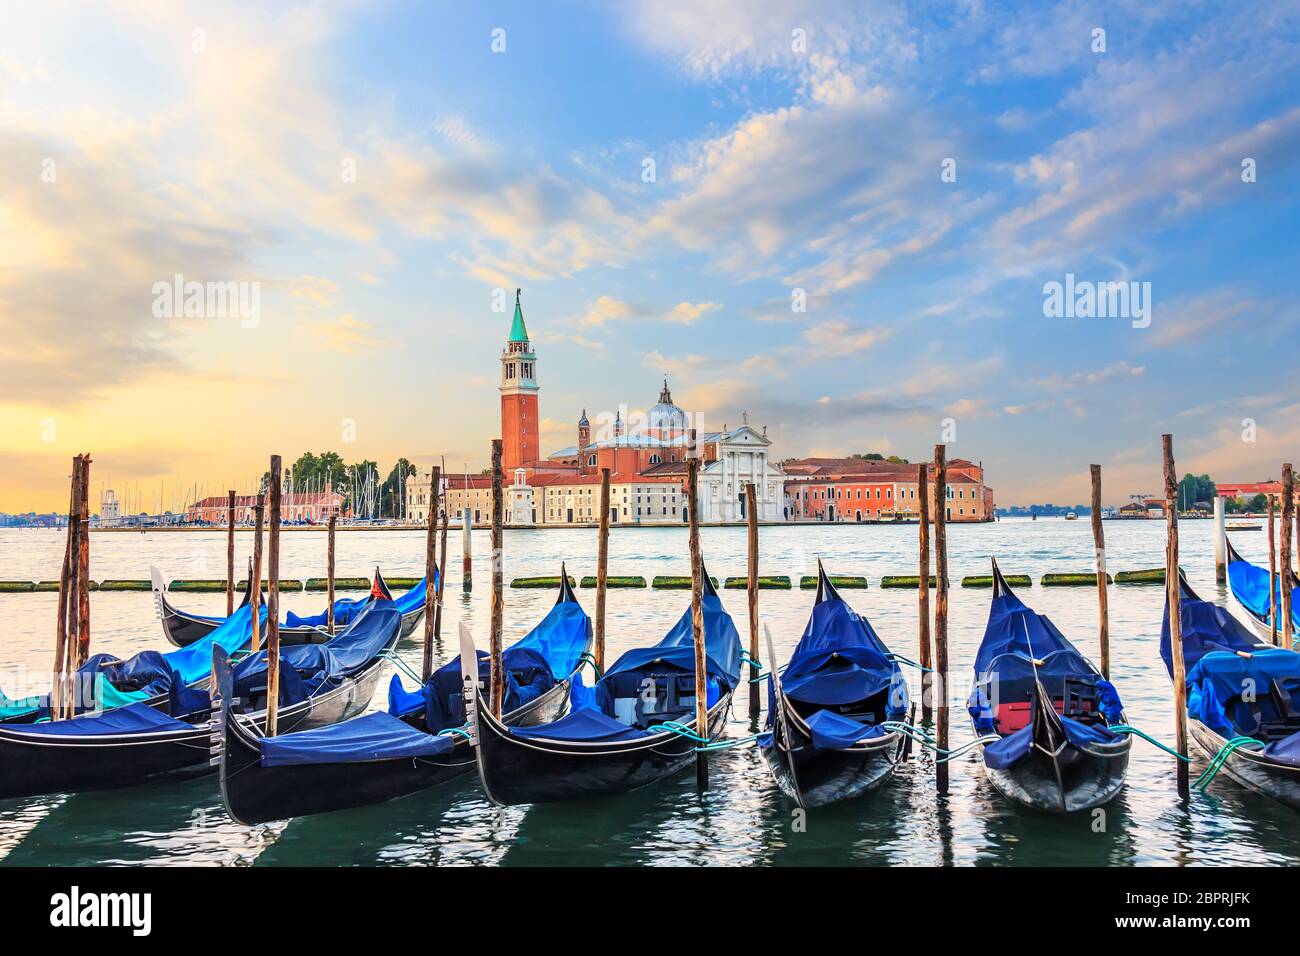 Gondolas moored at the pier in Grand Canal with San Giorgio Maggiore in the background, Venice, Italy. Stock Photo